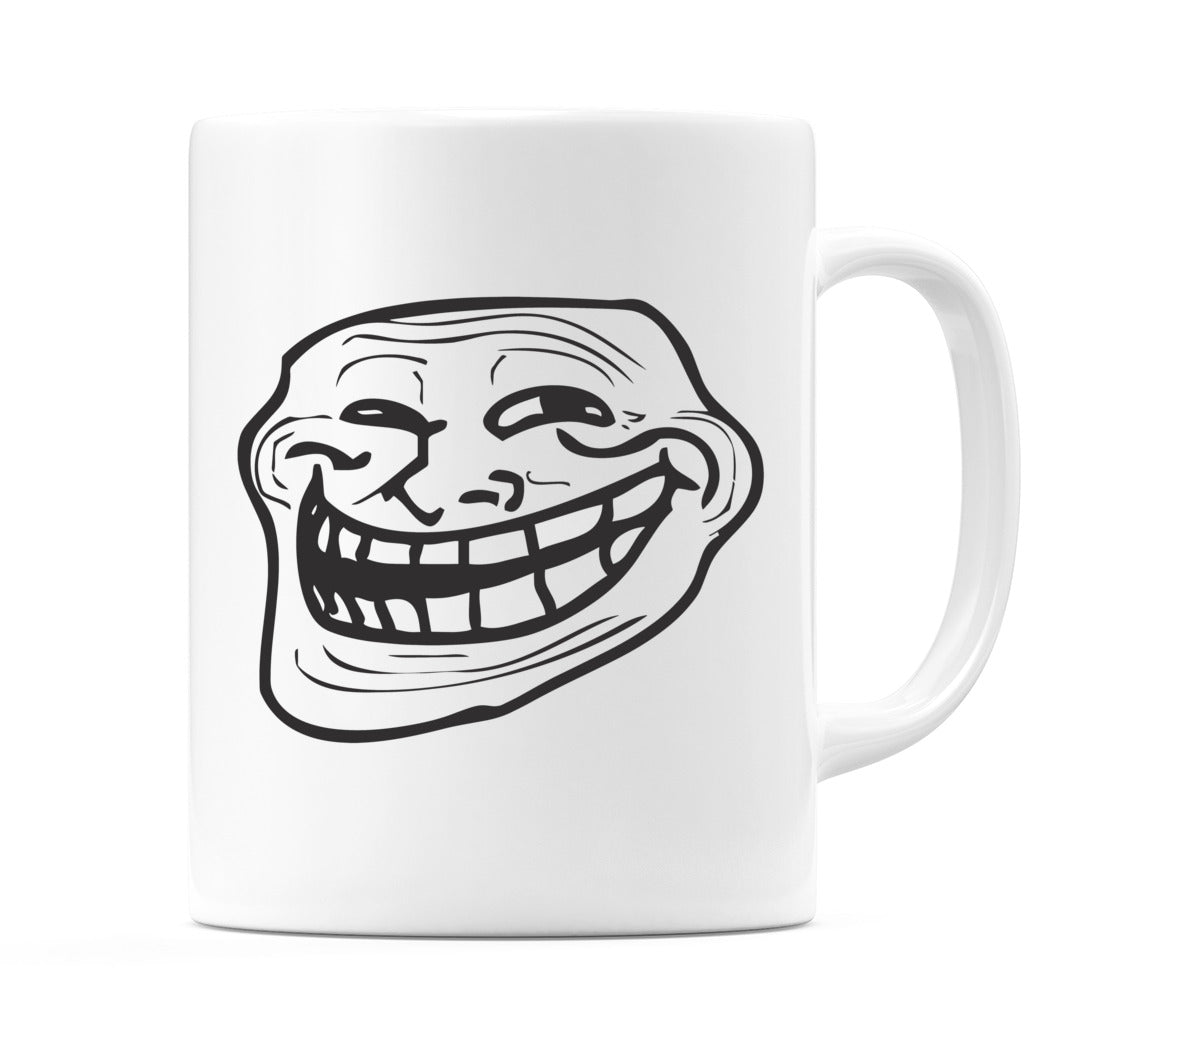 Trollface Mug